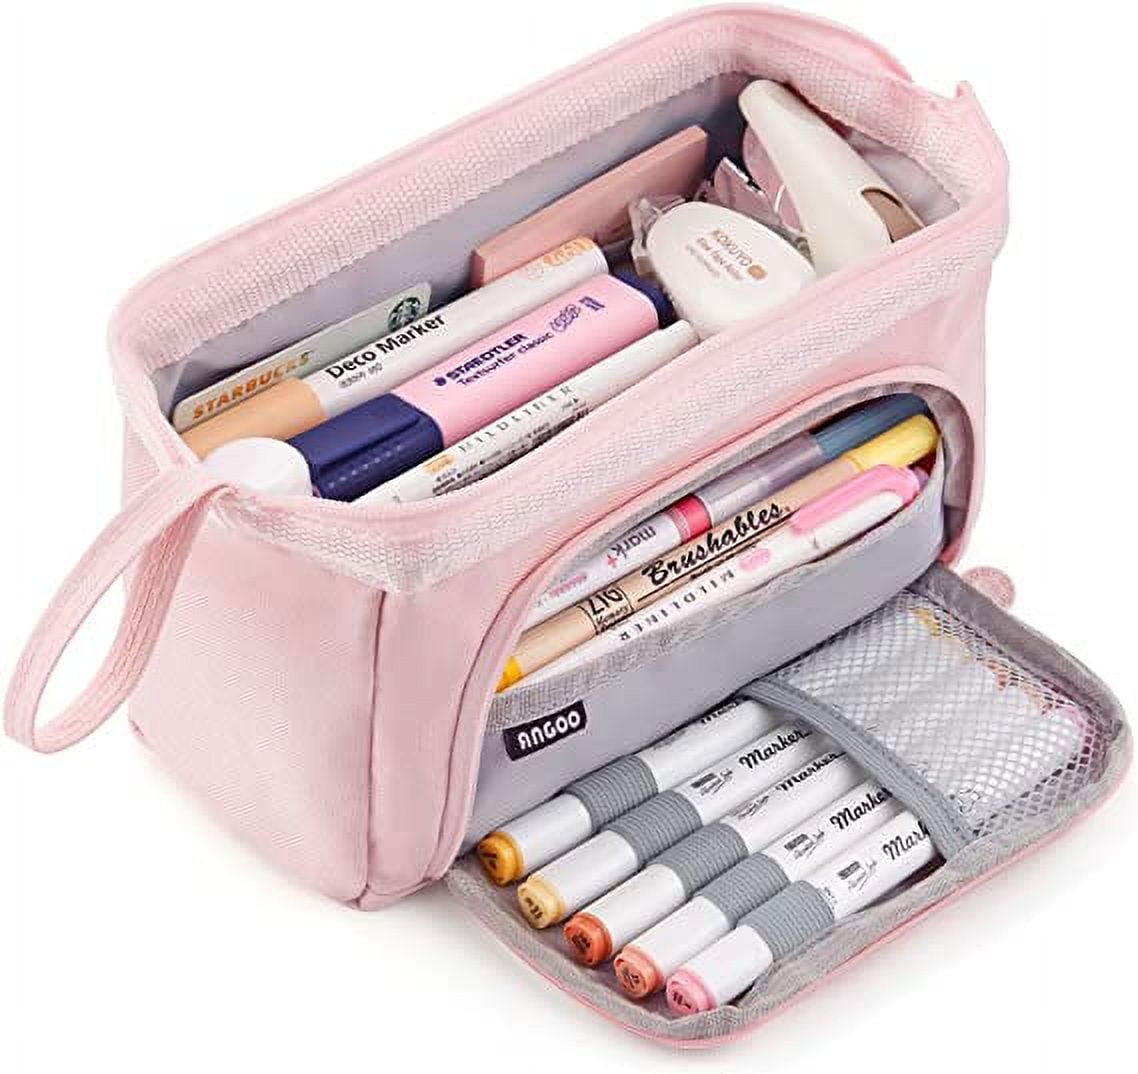 Mr. Pen- Pencil Case for Girls, Pink, Pencil Bag, Cute Pencil Case, Pouch  Bags, School Supplies for Teen Girls, Pen Pouch, School Stuff, Pencil